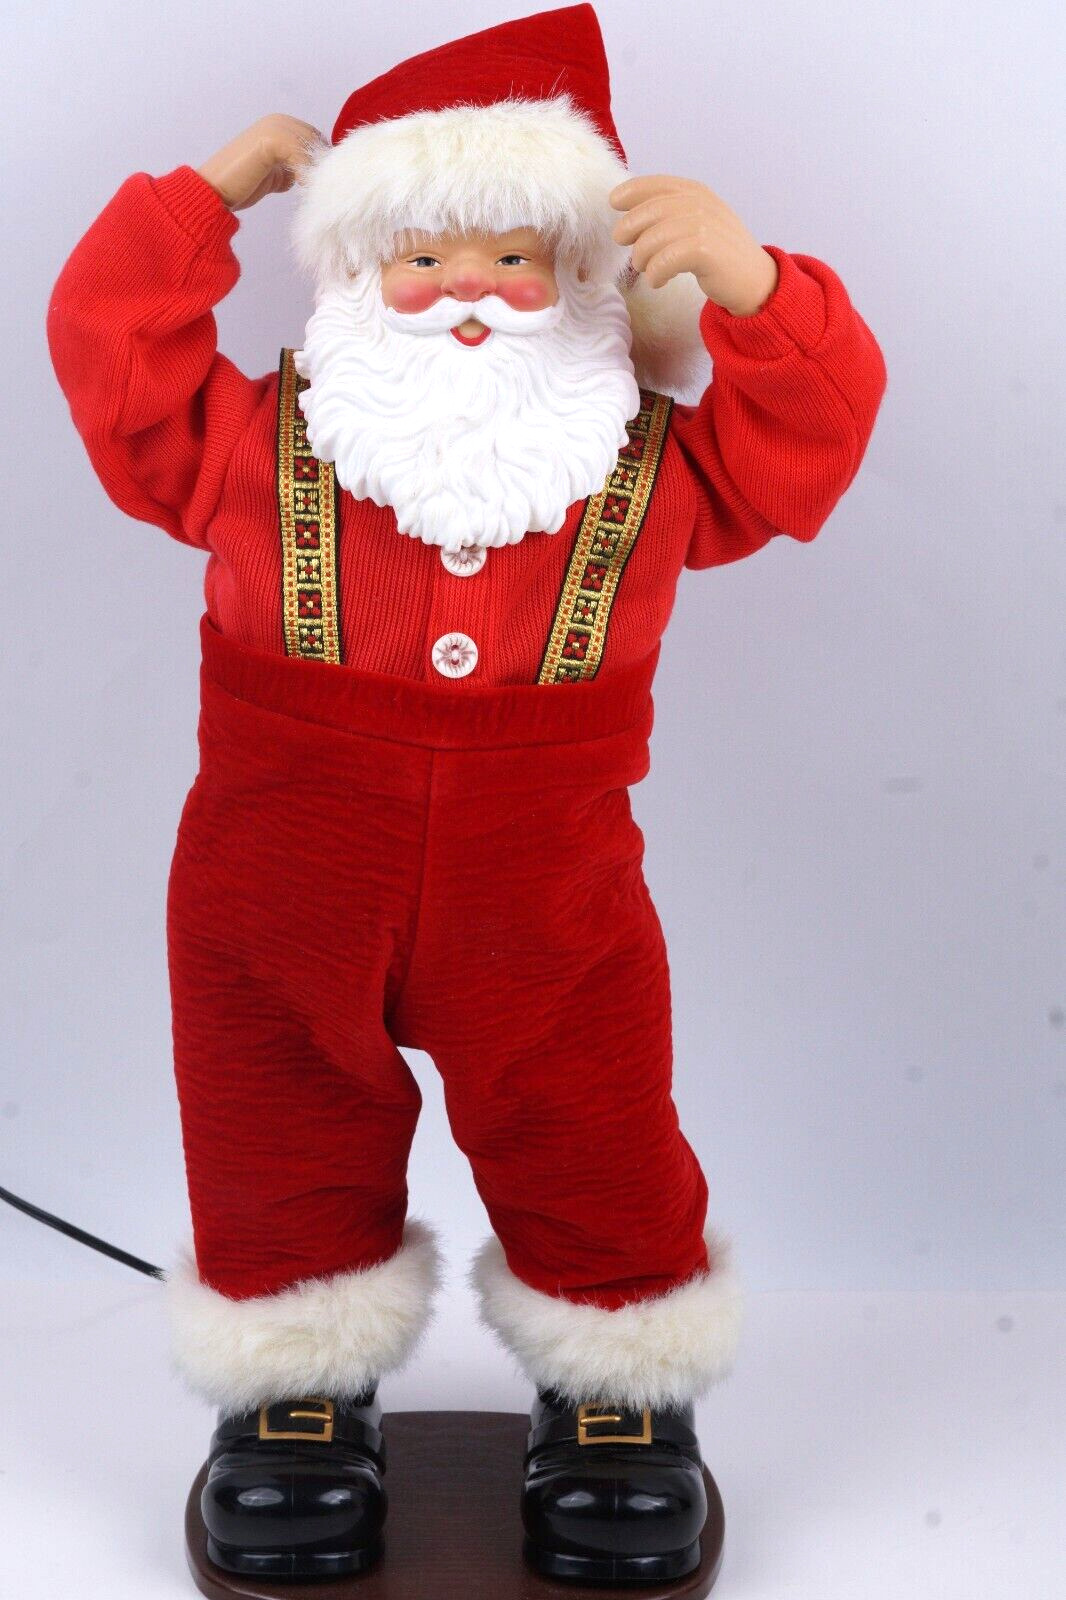 Jingle Bell Rock Santa Animated Dancing Singing Santa Claus Christmas Fantasy